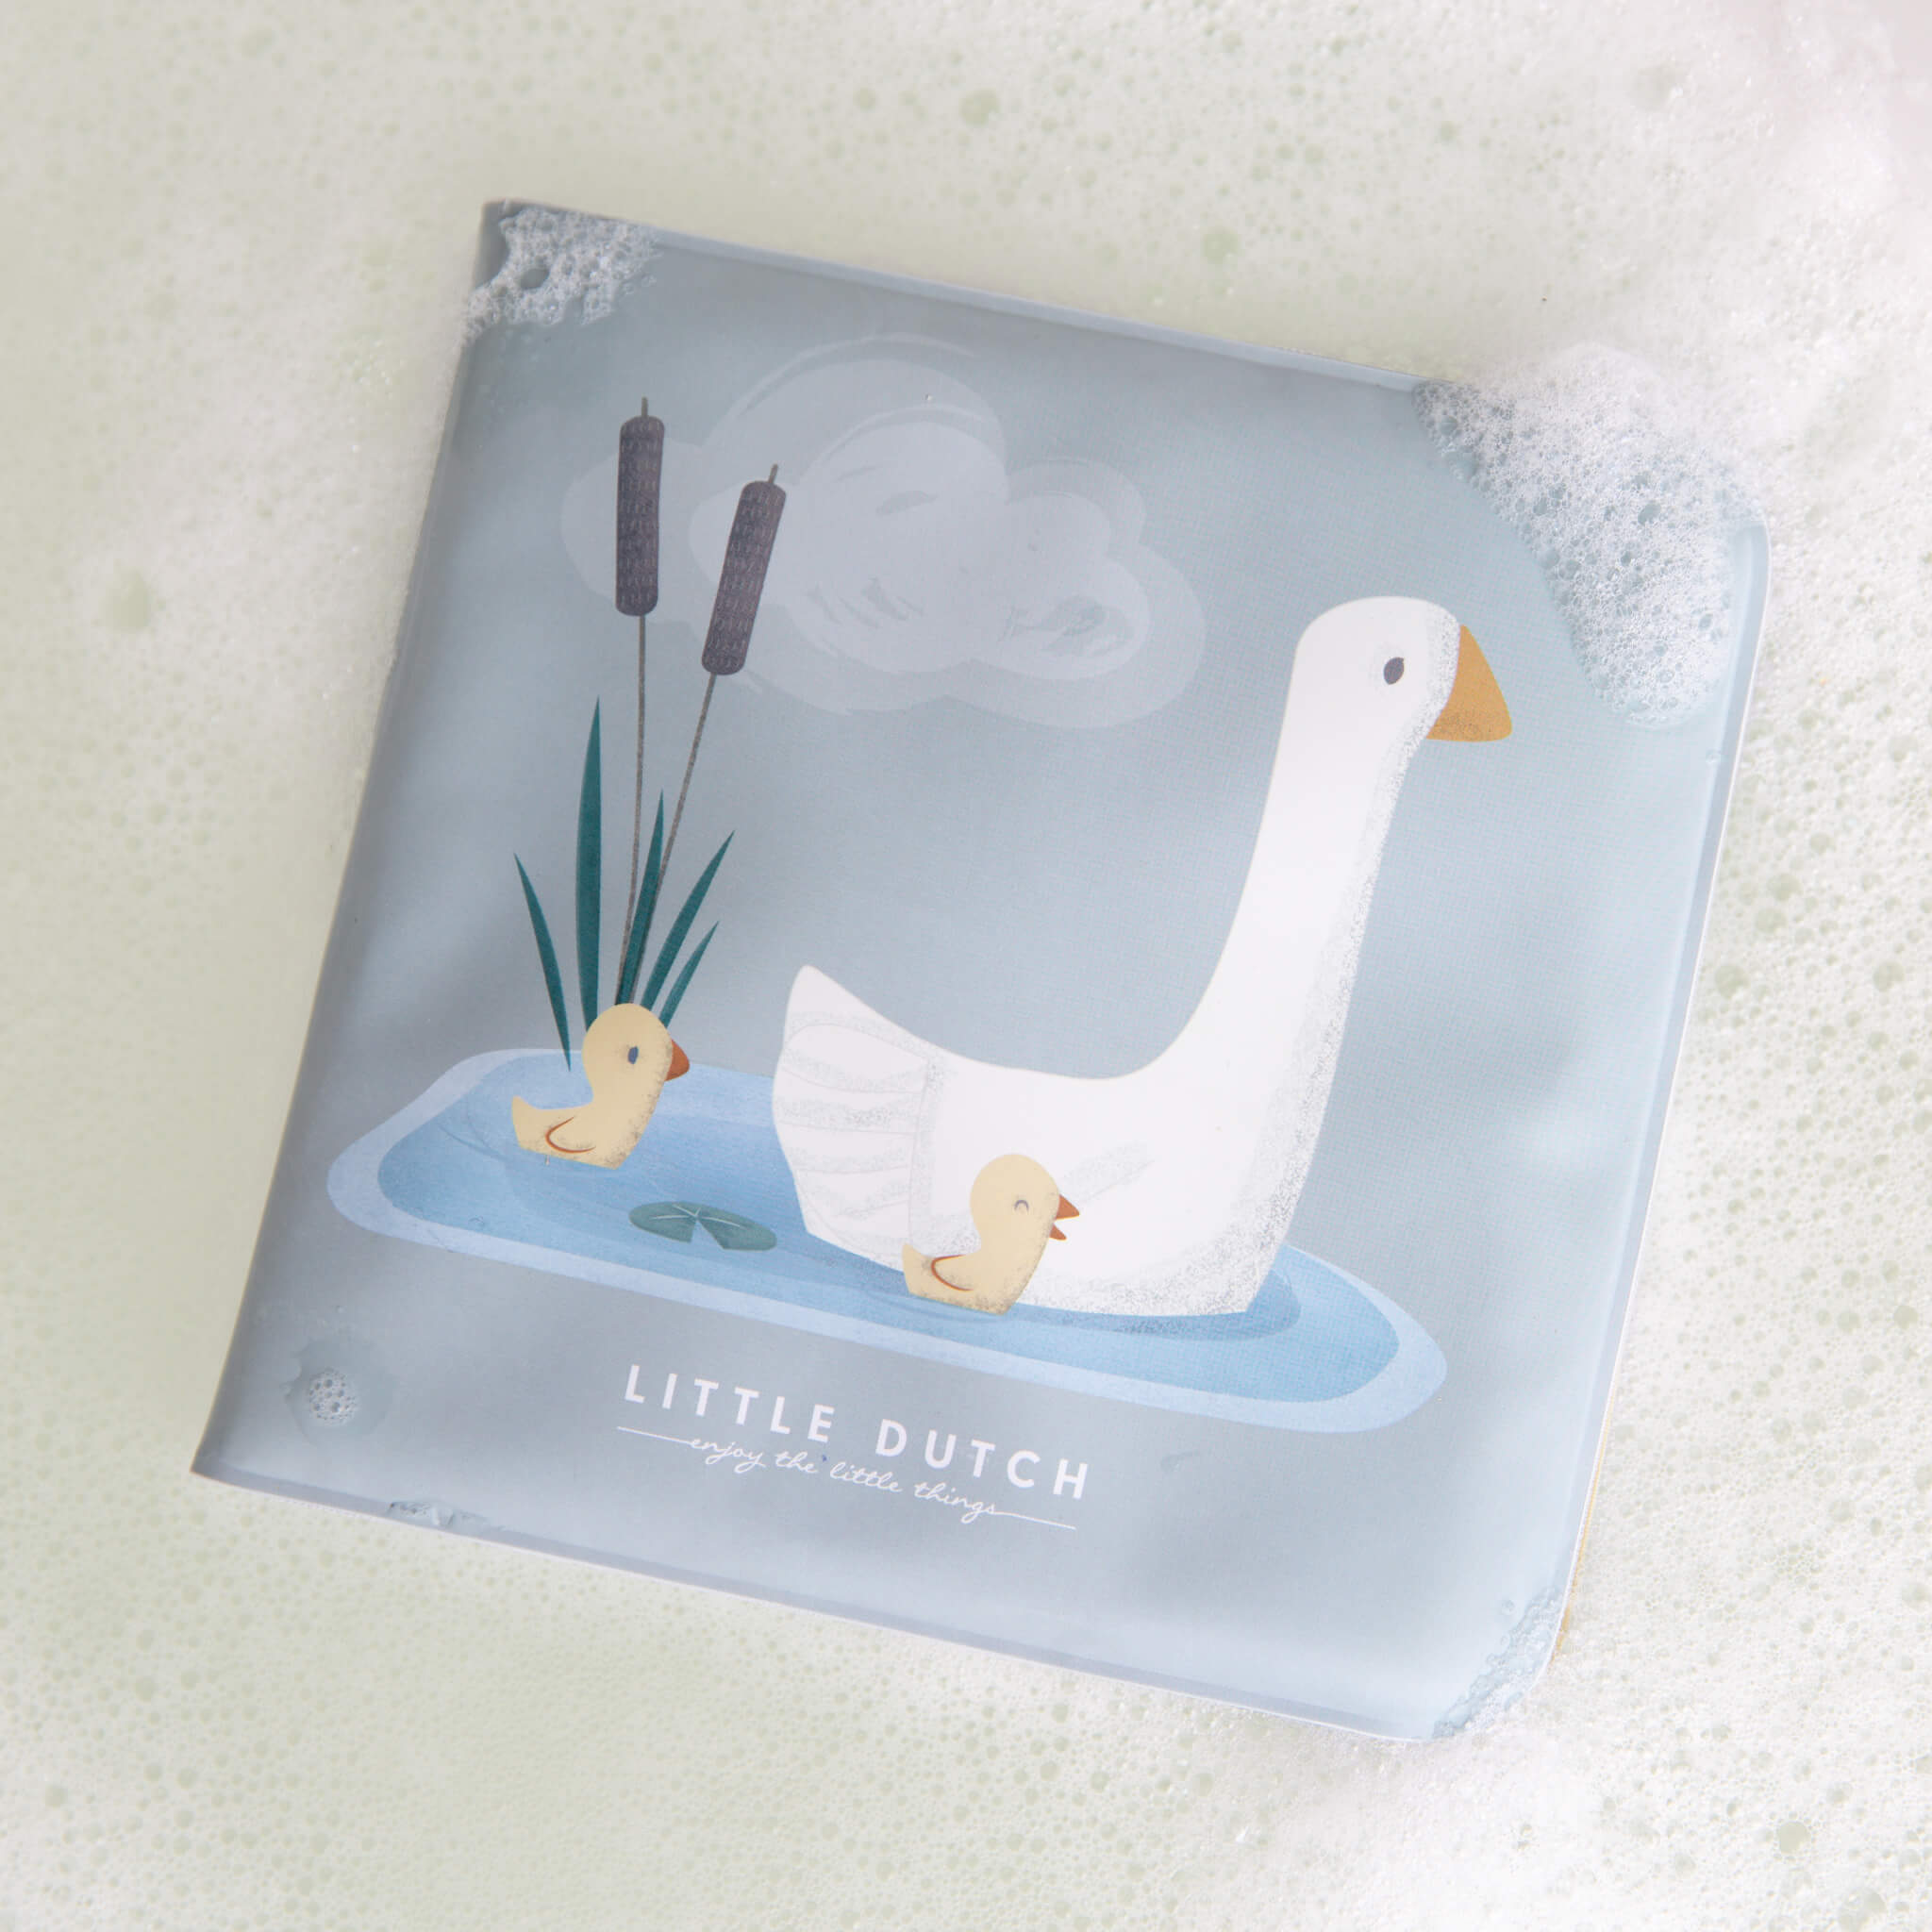 Little Dutch Little Goose Bath Book in Bath